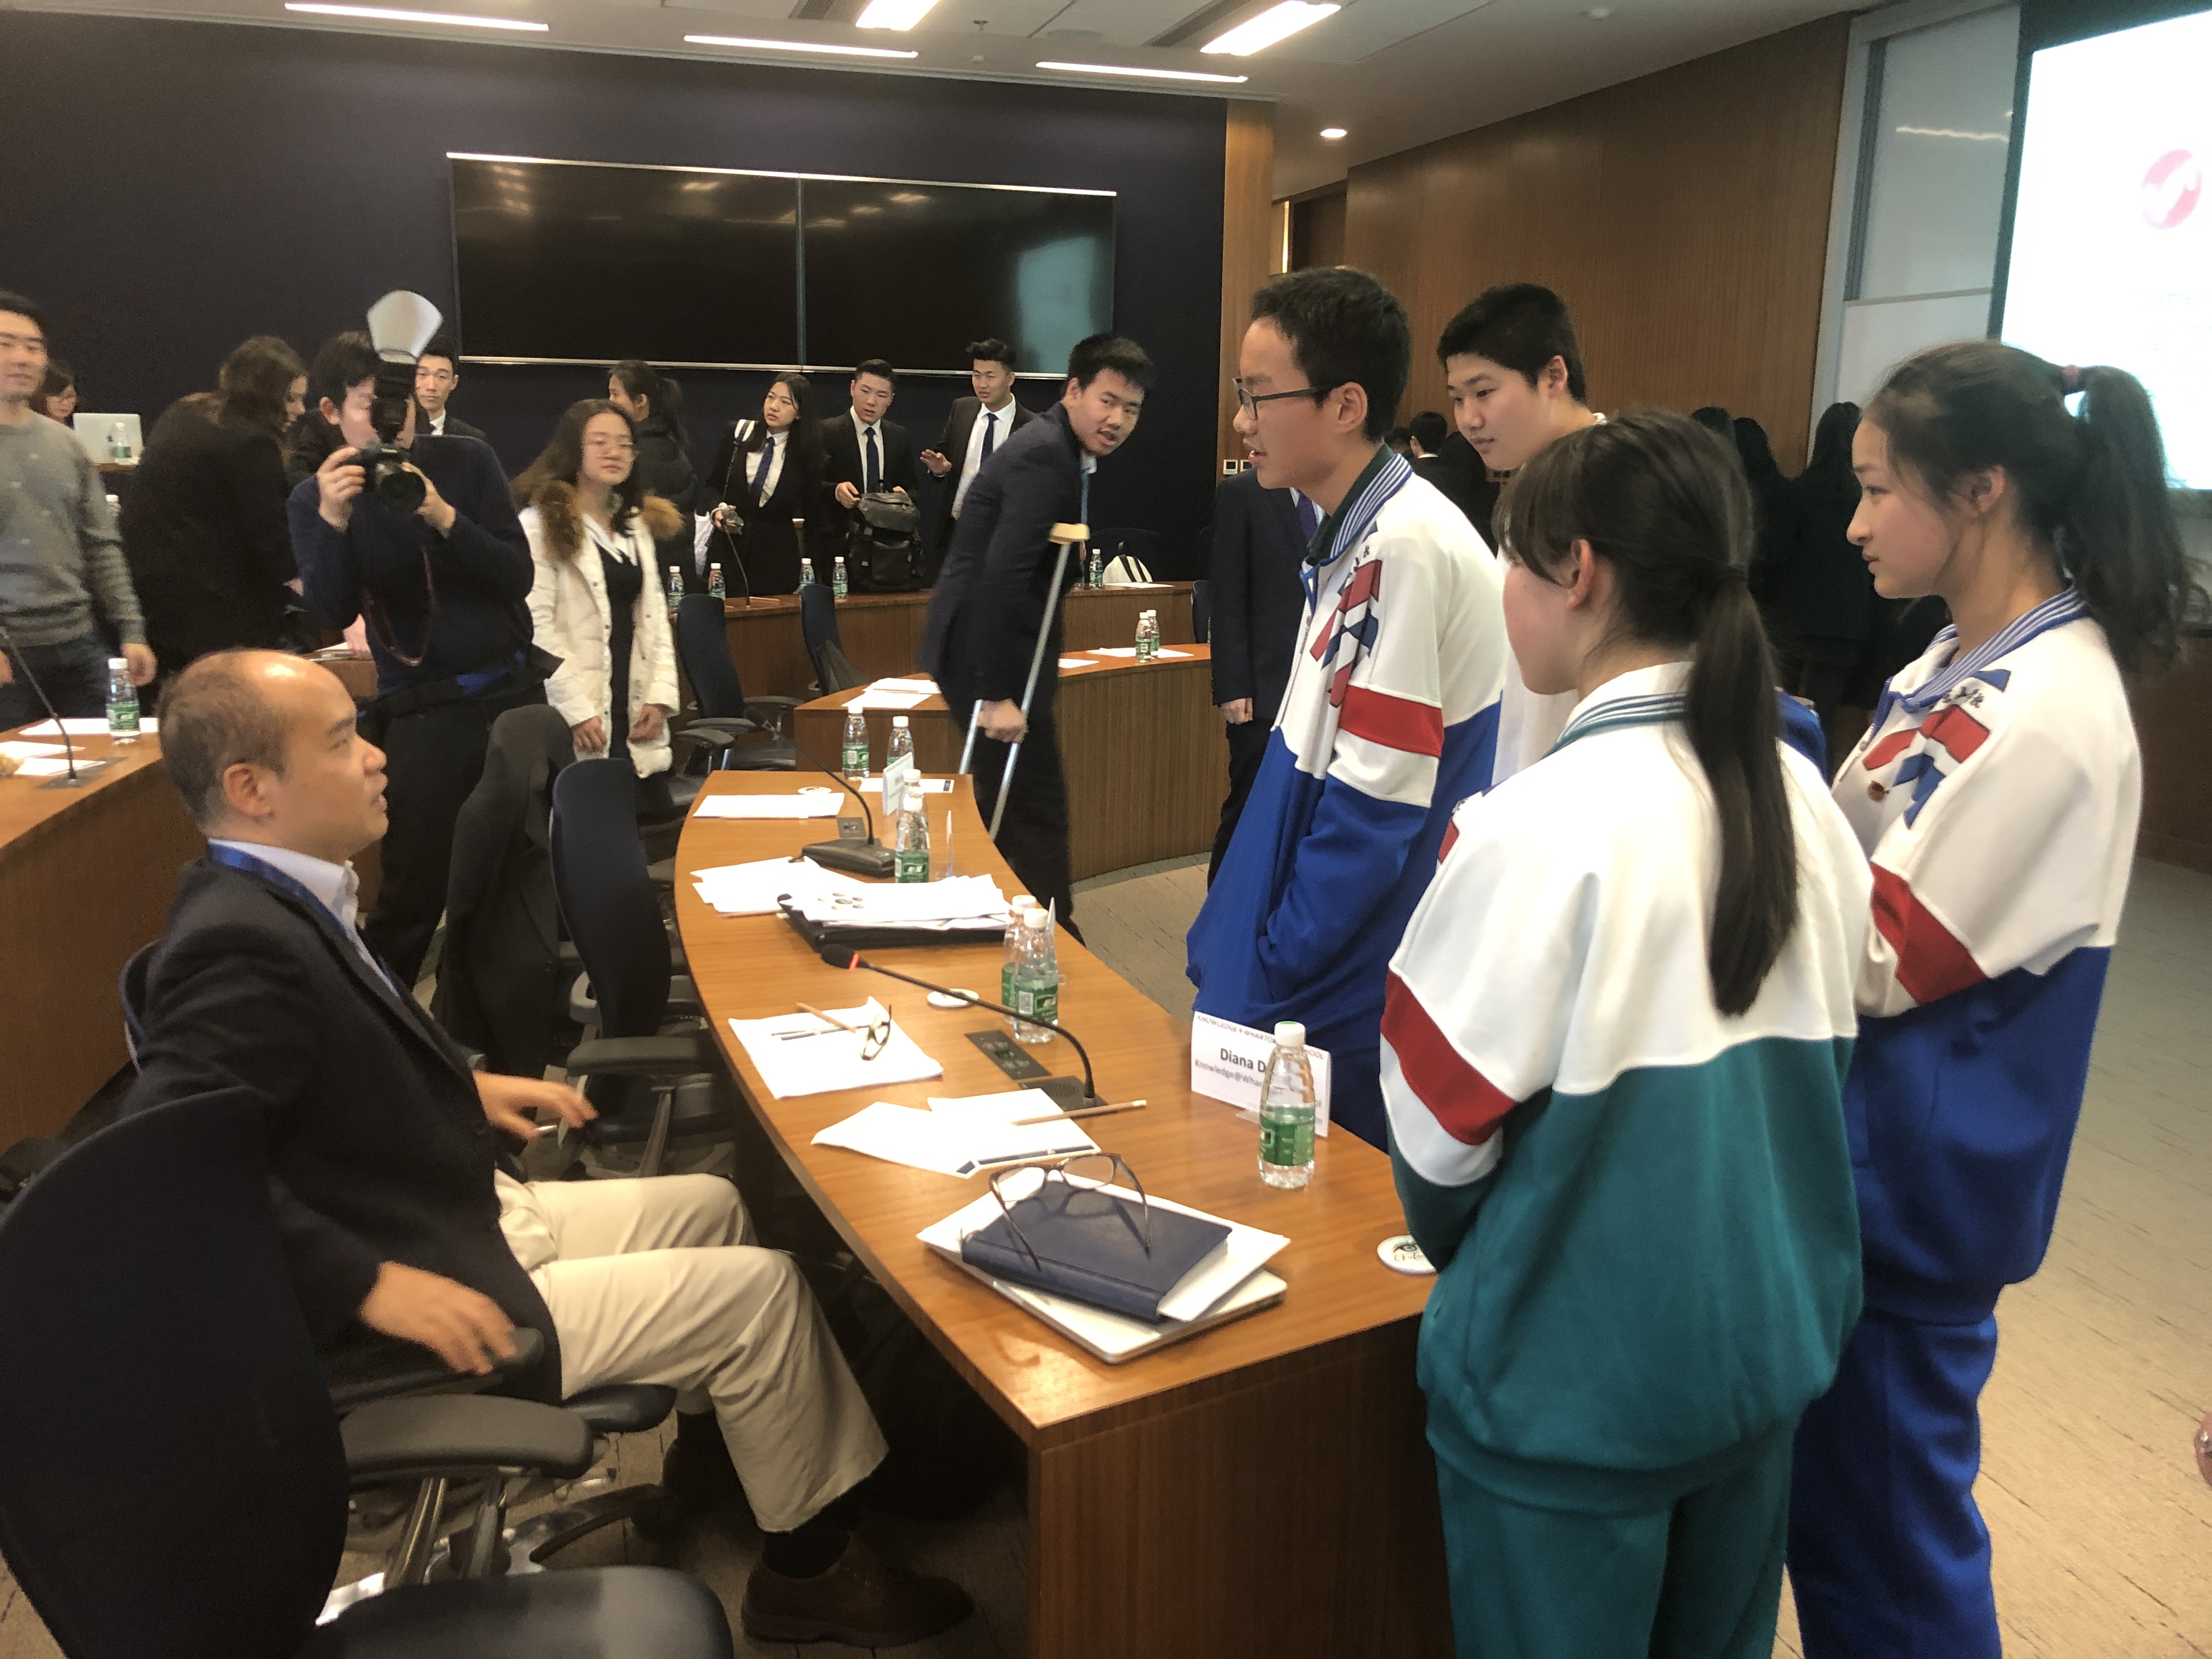 Members of Team Coconut Union Jingshan talk with judge, Yanbing Qiu.